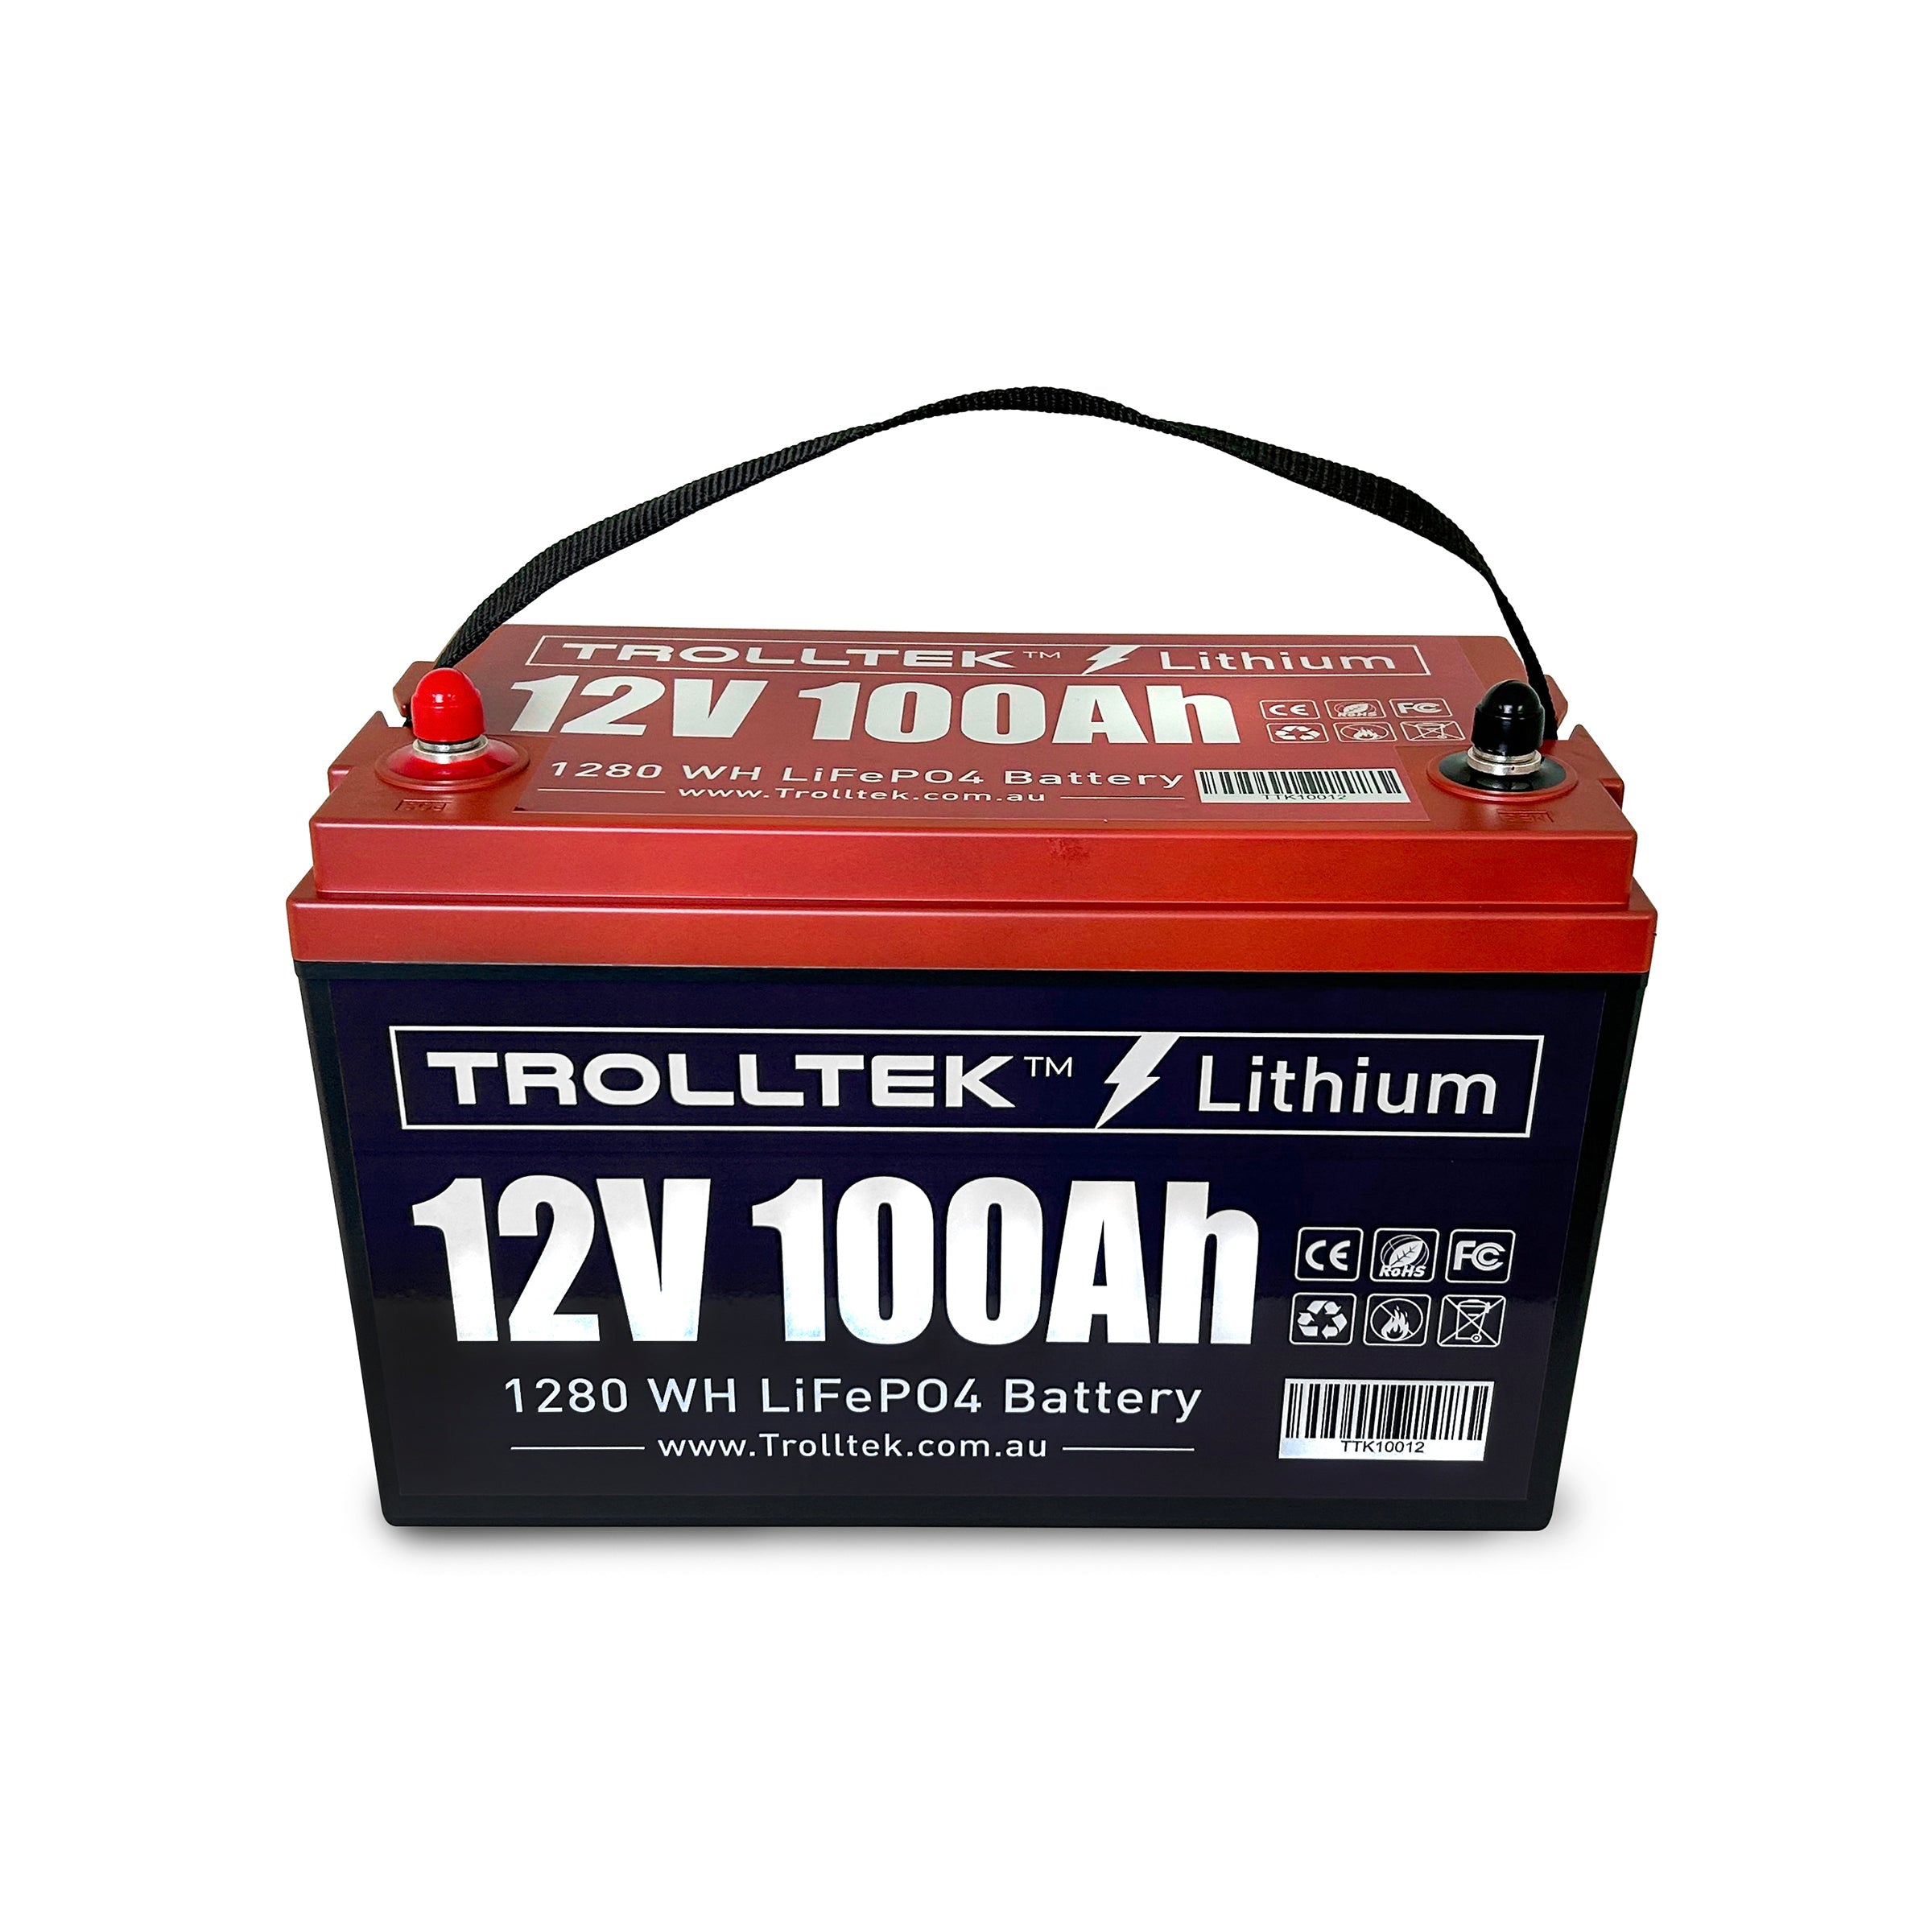 Trolltek DC/DC Waterproof Lithium Battery Chargers - TrollTek